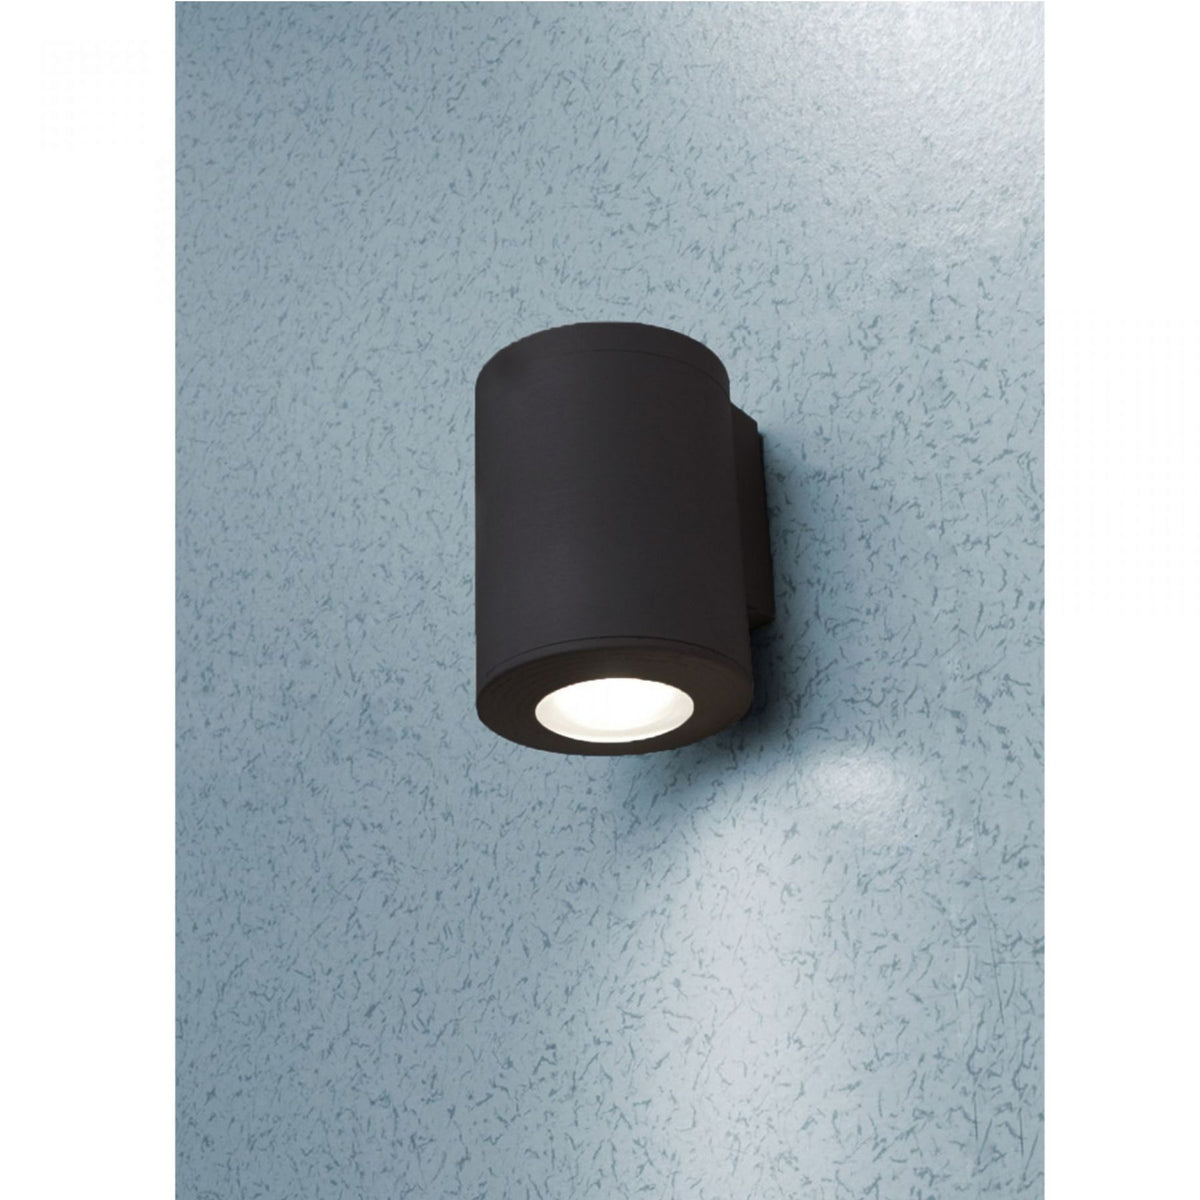 Franca 90 1/2Lt LED 3.5W Up/Down Wall Light -Black/Grey Finish CLEARANCE